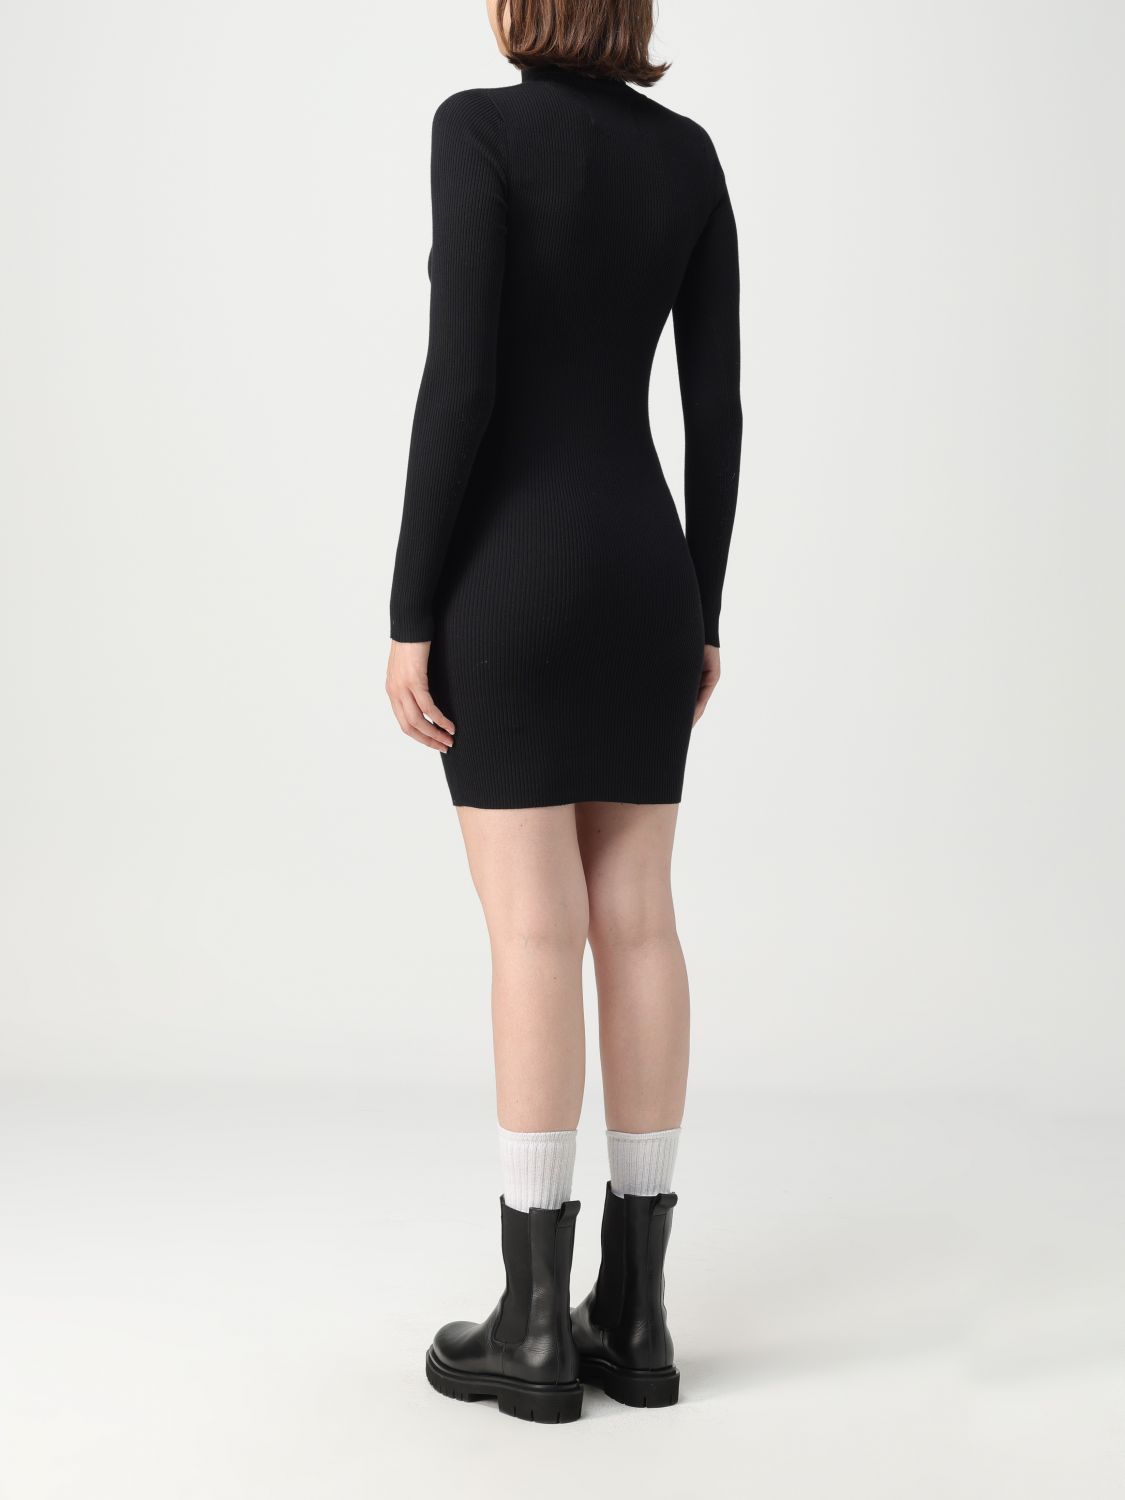 CALVIN KLEIN JEANS: dress for woman - Black  Calvin Klein Jeans dress  J20J221408 online at